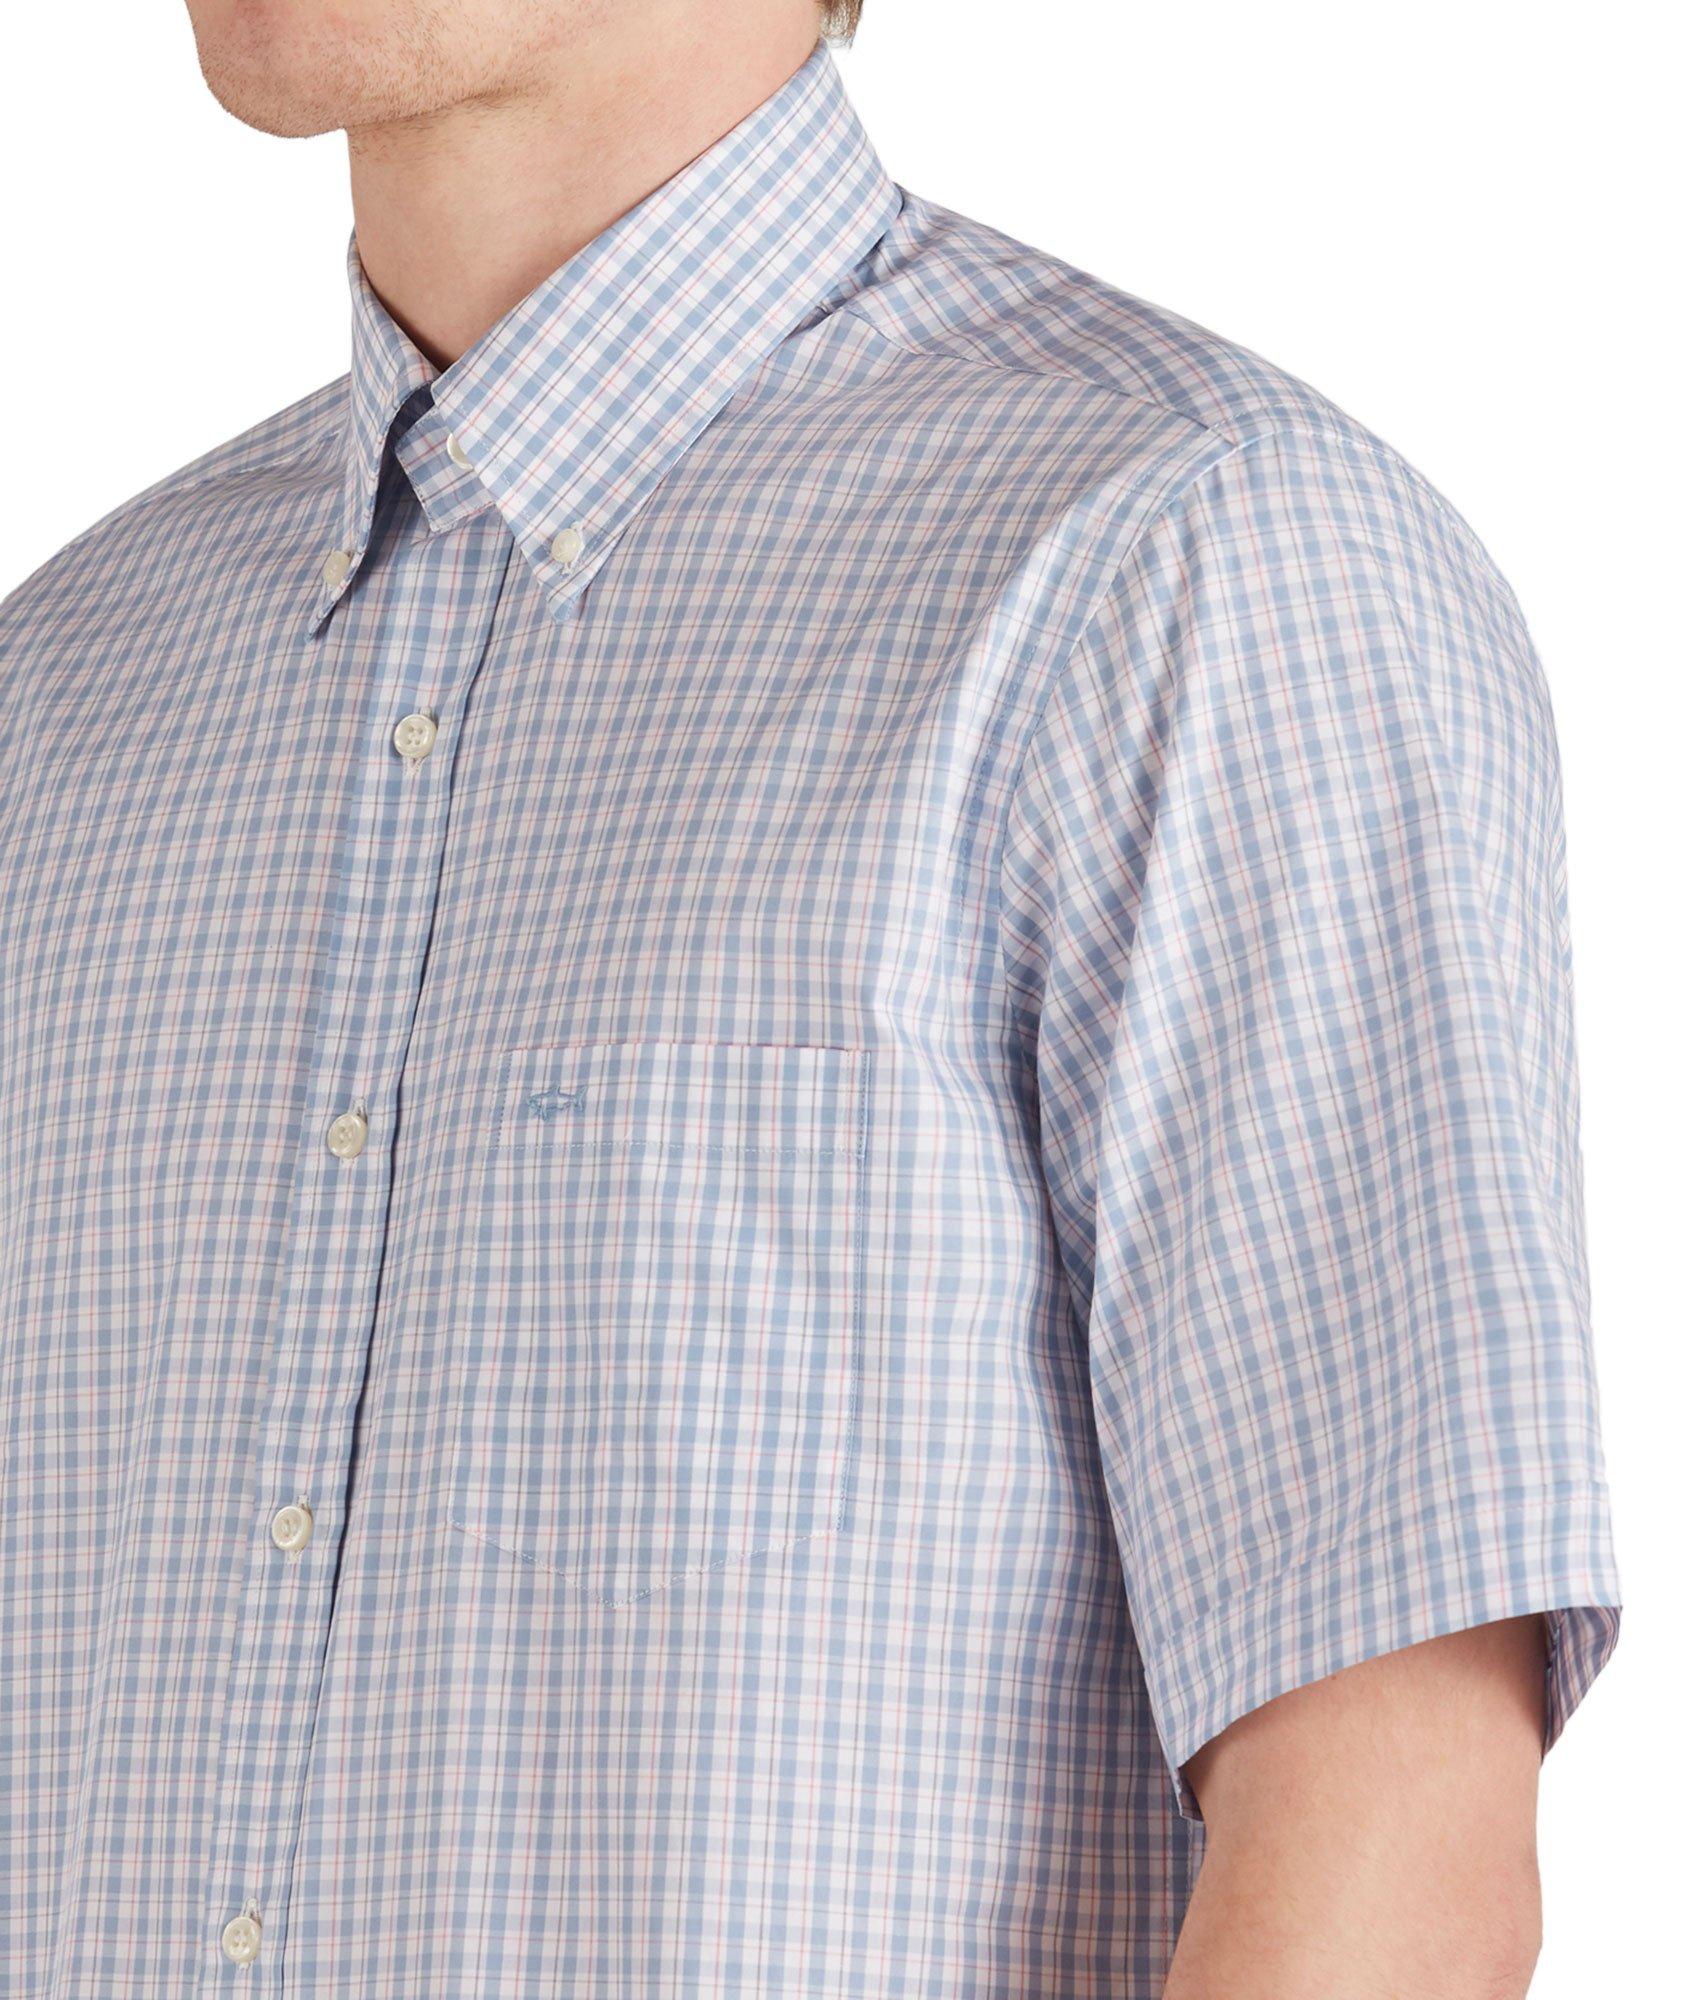 Short-Sleeve Checked Cotton Shirt image 3